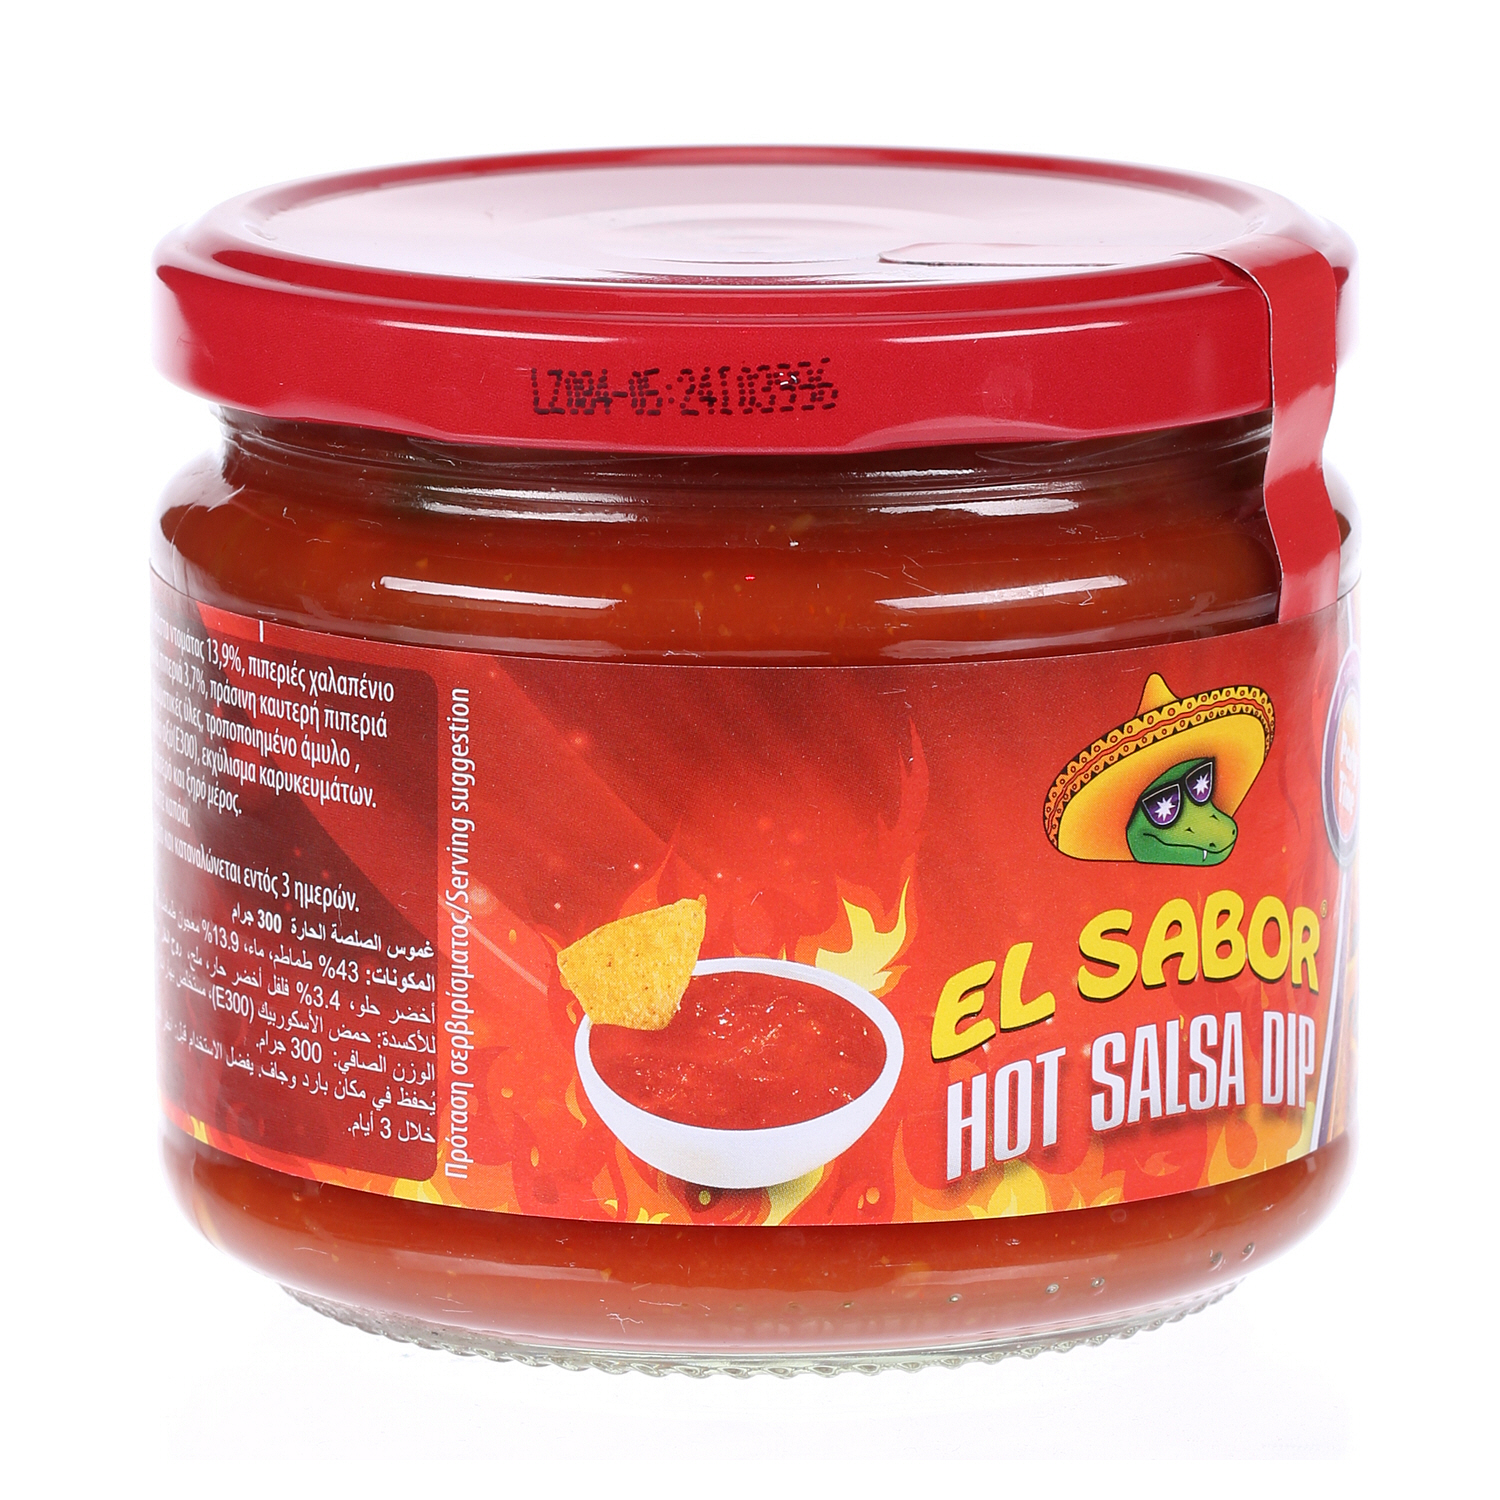 El Sabor Hot Salsa Dip Jar 300 g